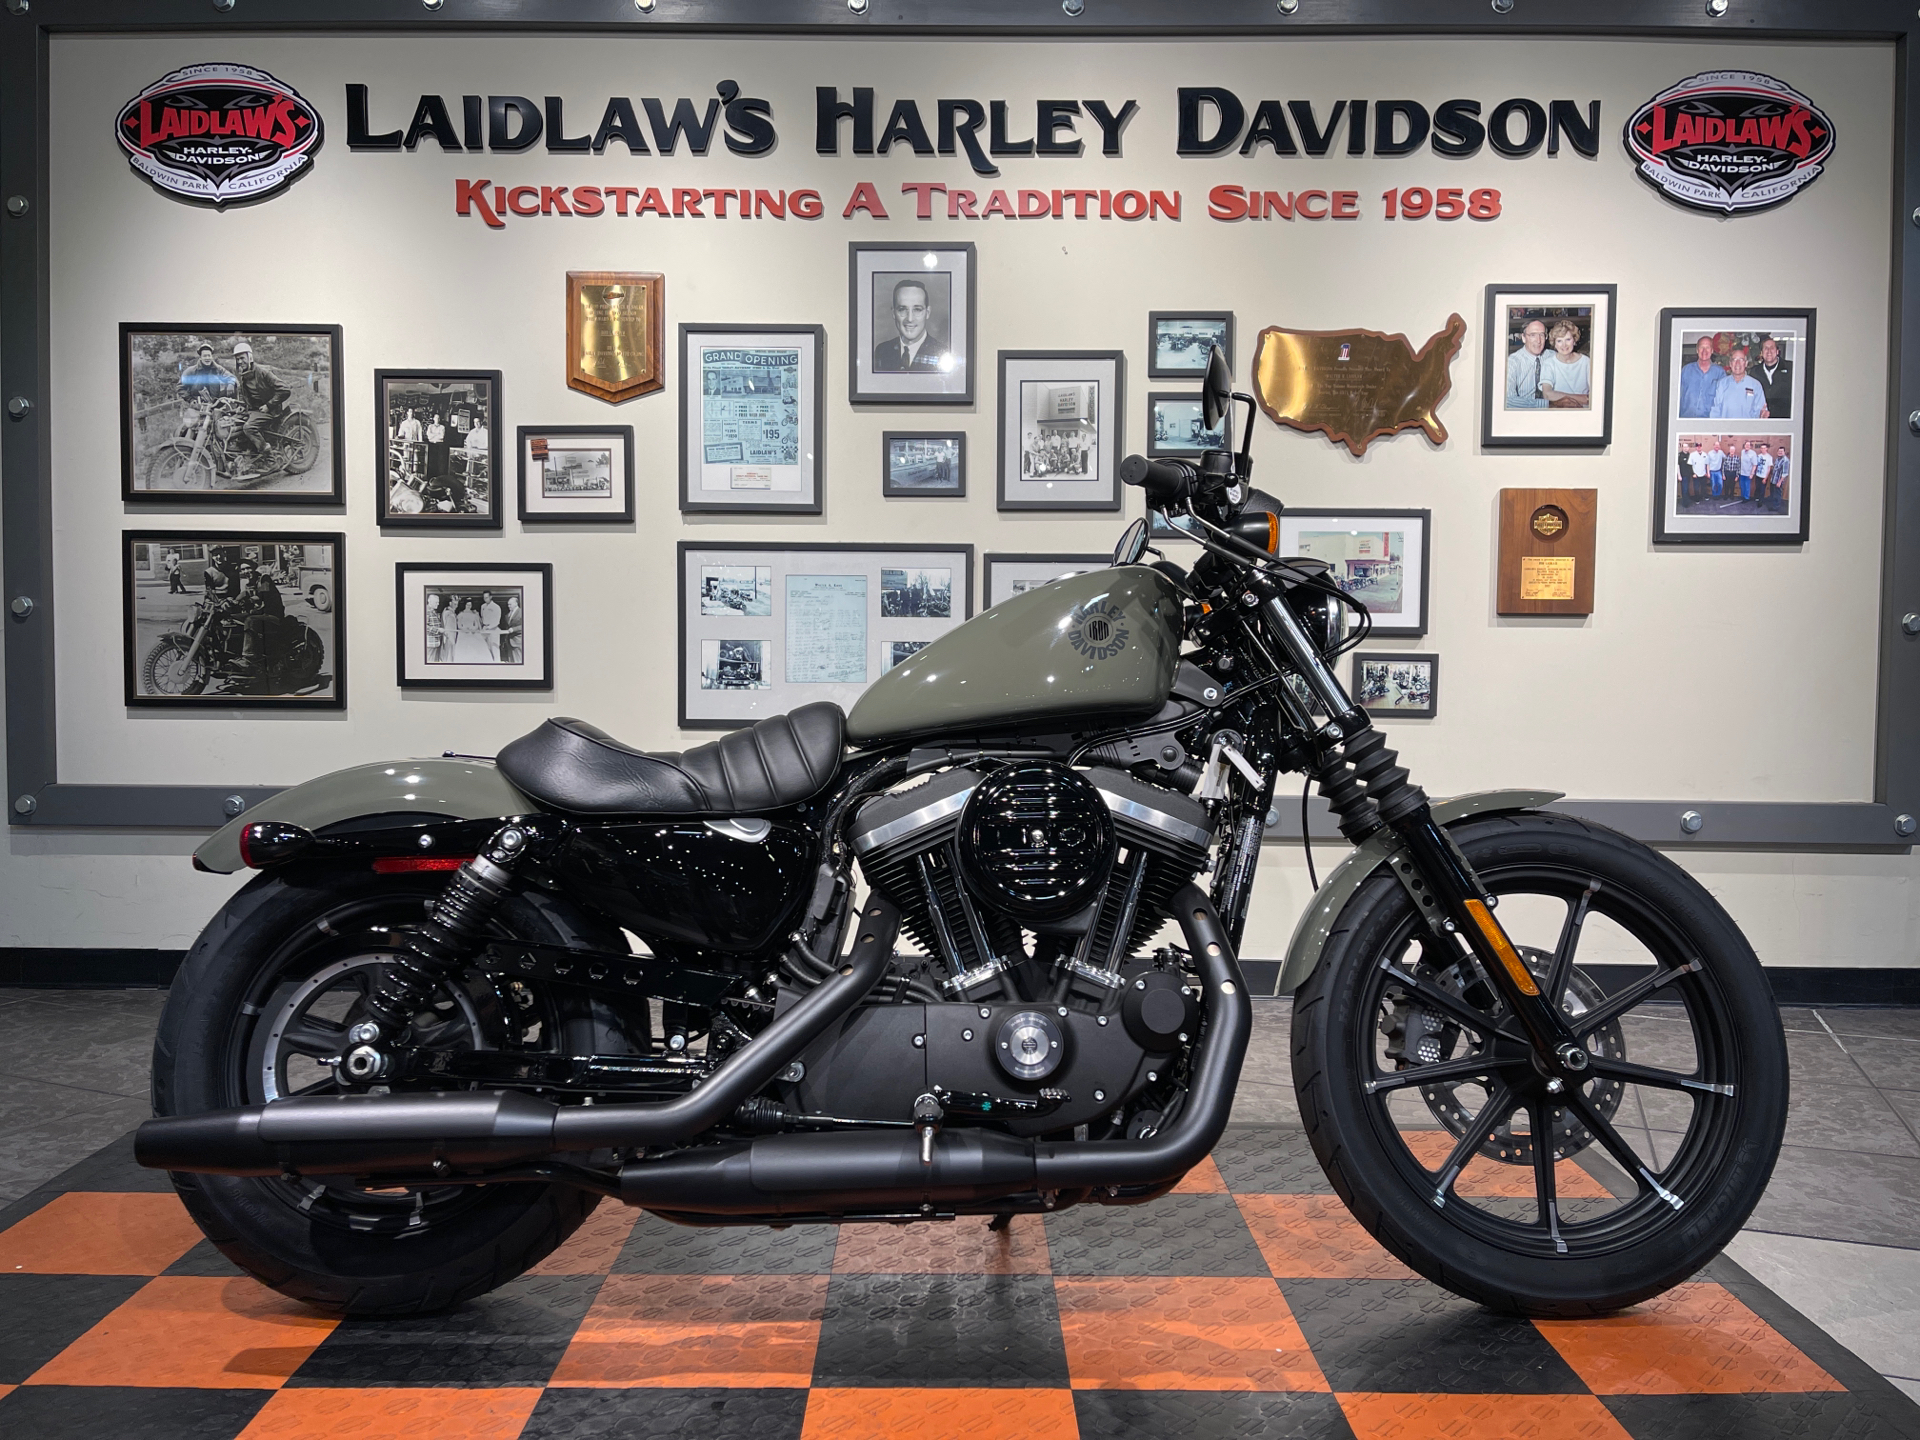 New 2021 Harley Davidson Iron 883 Deadwood Green Baldwin Park Ca 28985